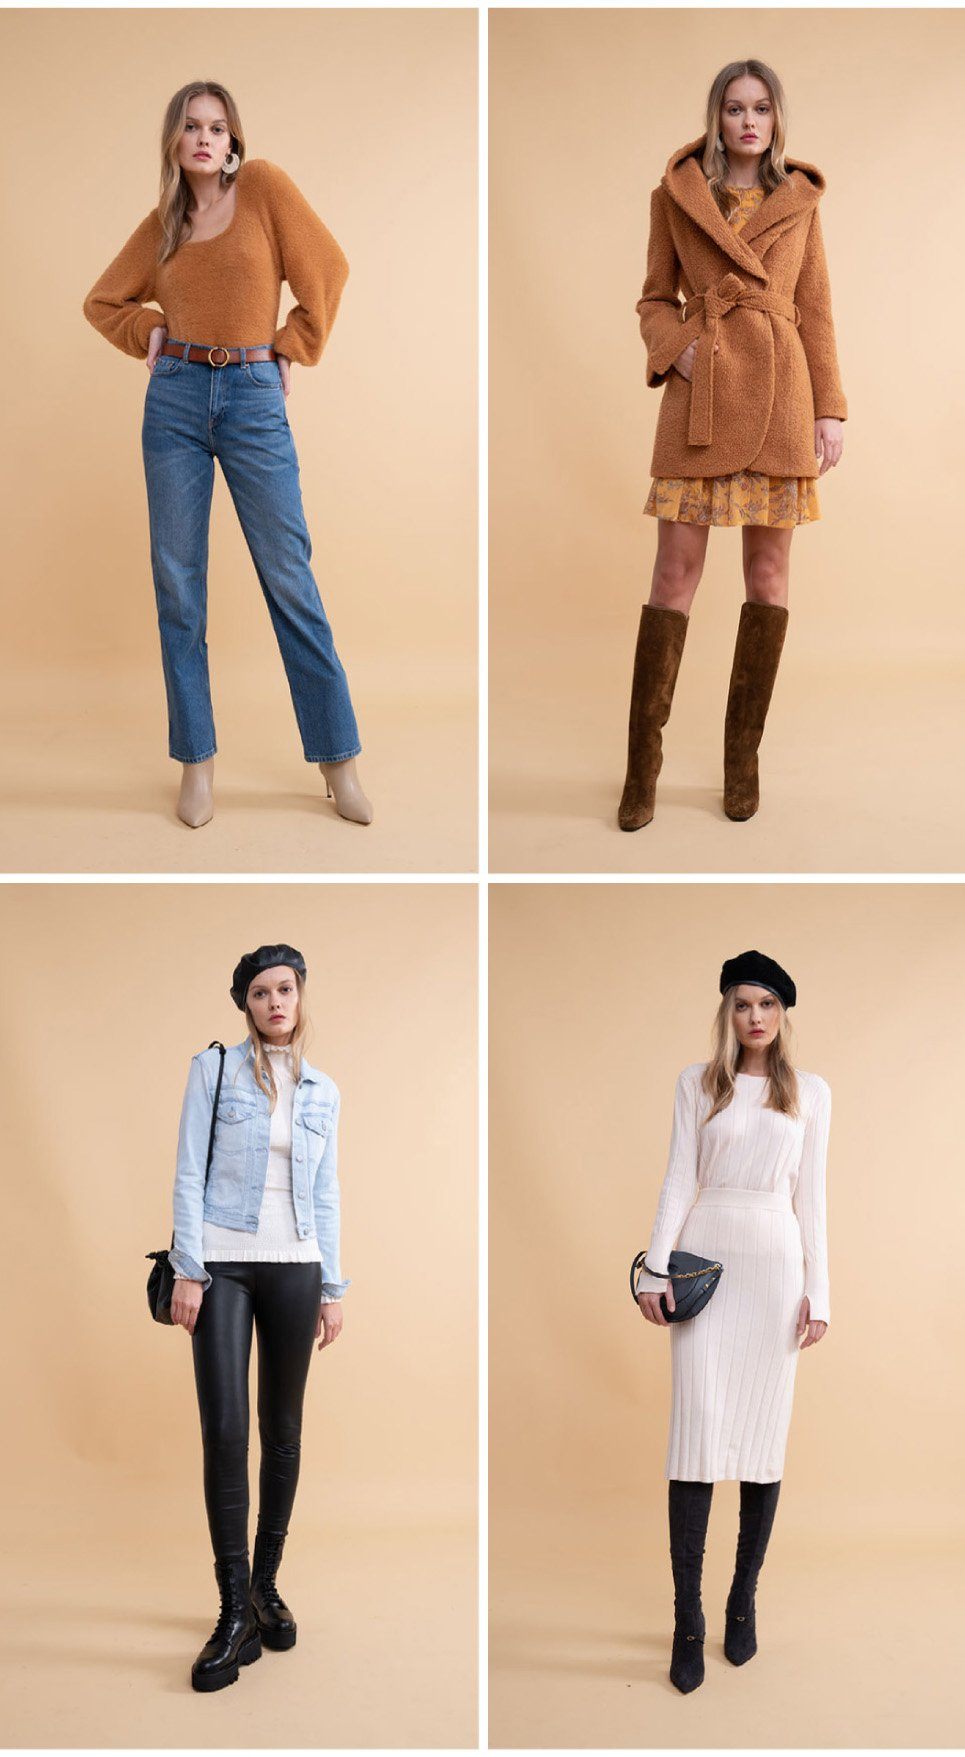 Introducing:  Fashion Prime Wardrobe – Rachel Parcell, Inc.